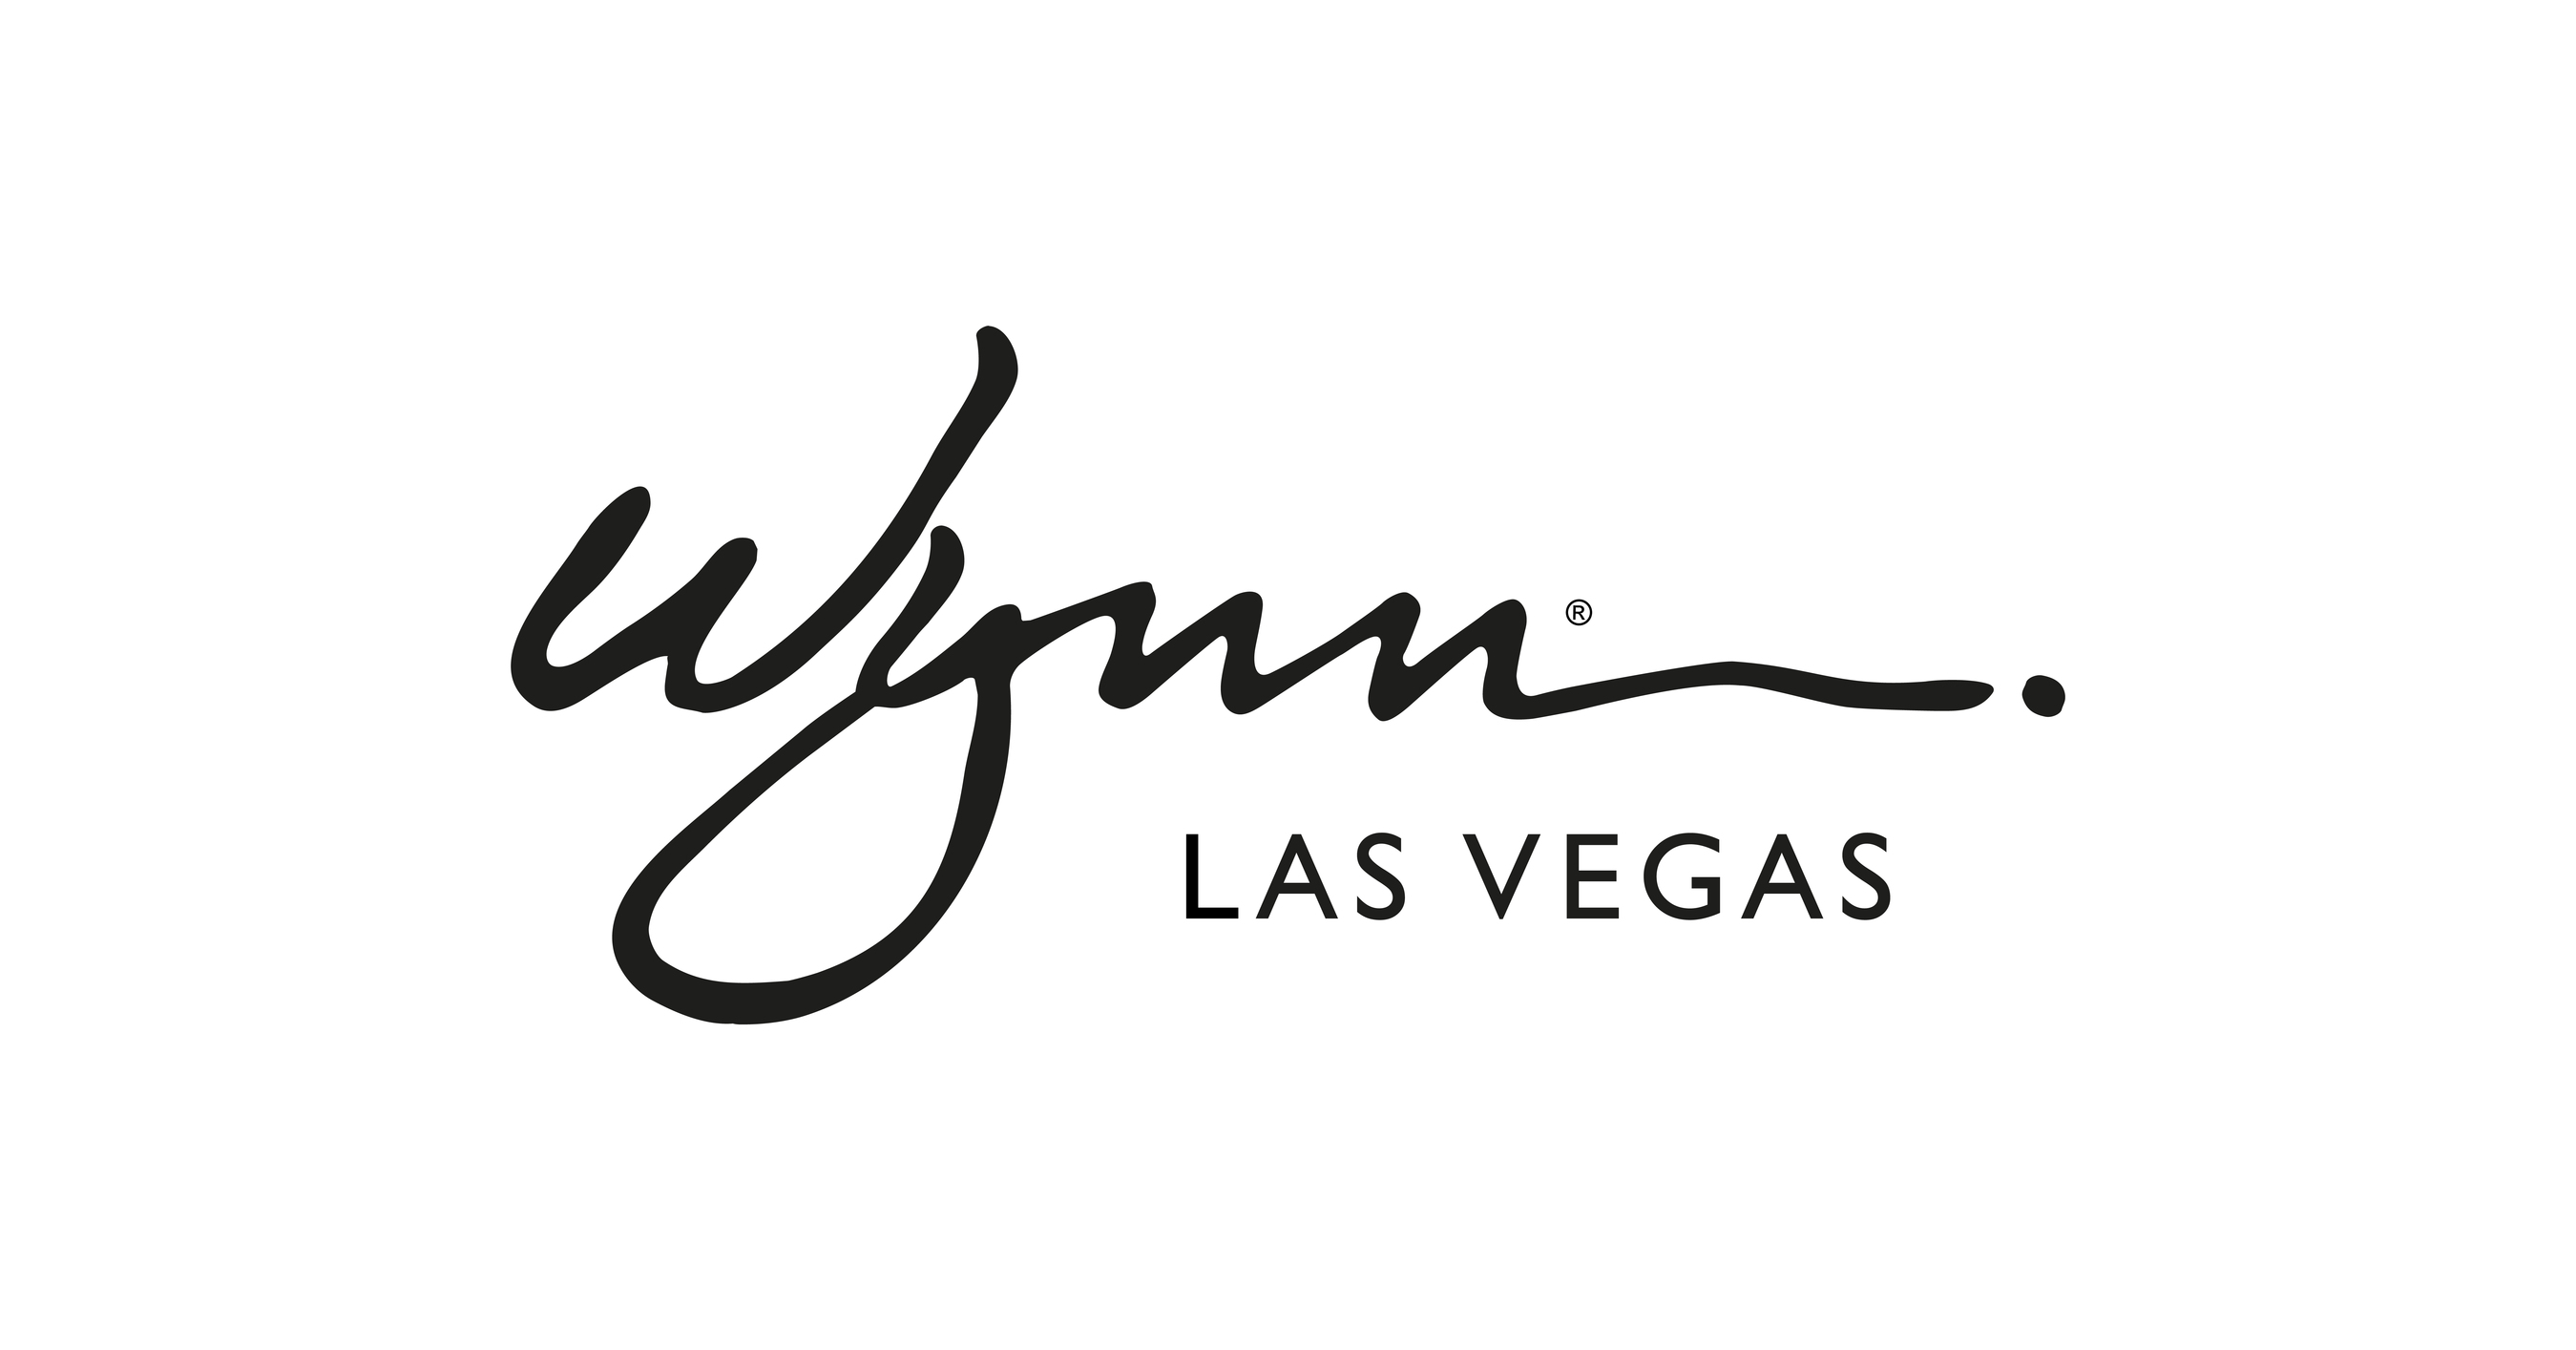 Louis Vuitton Las Vegas Wynn Women's, clothing store, United